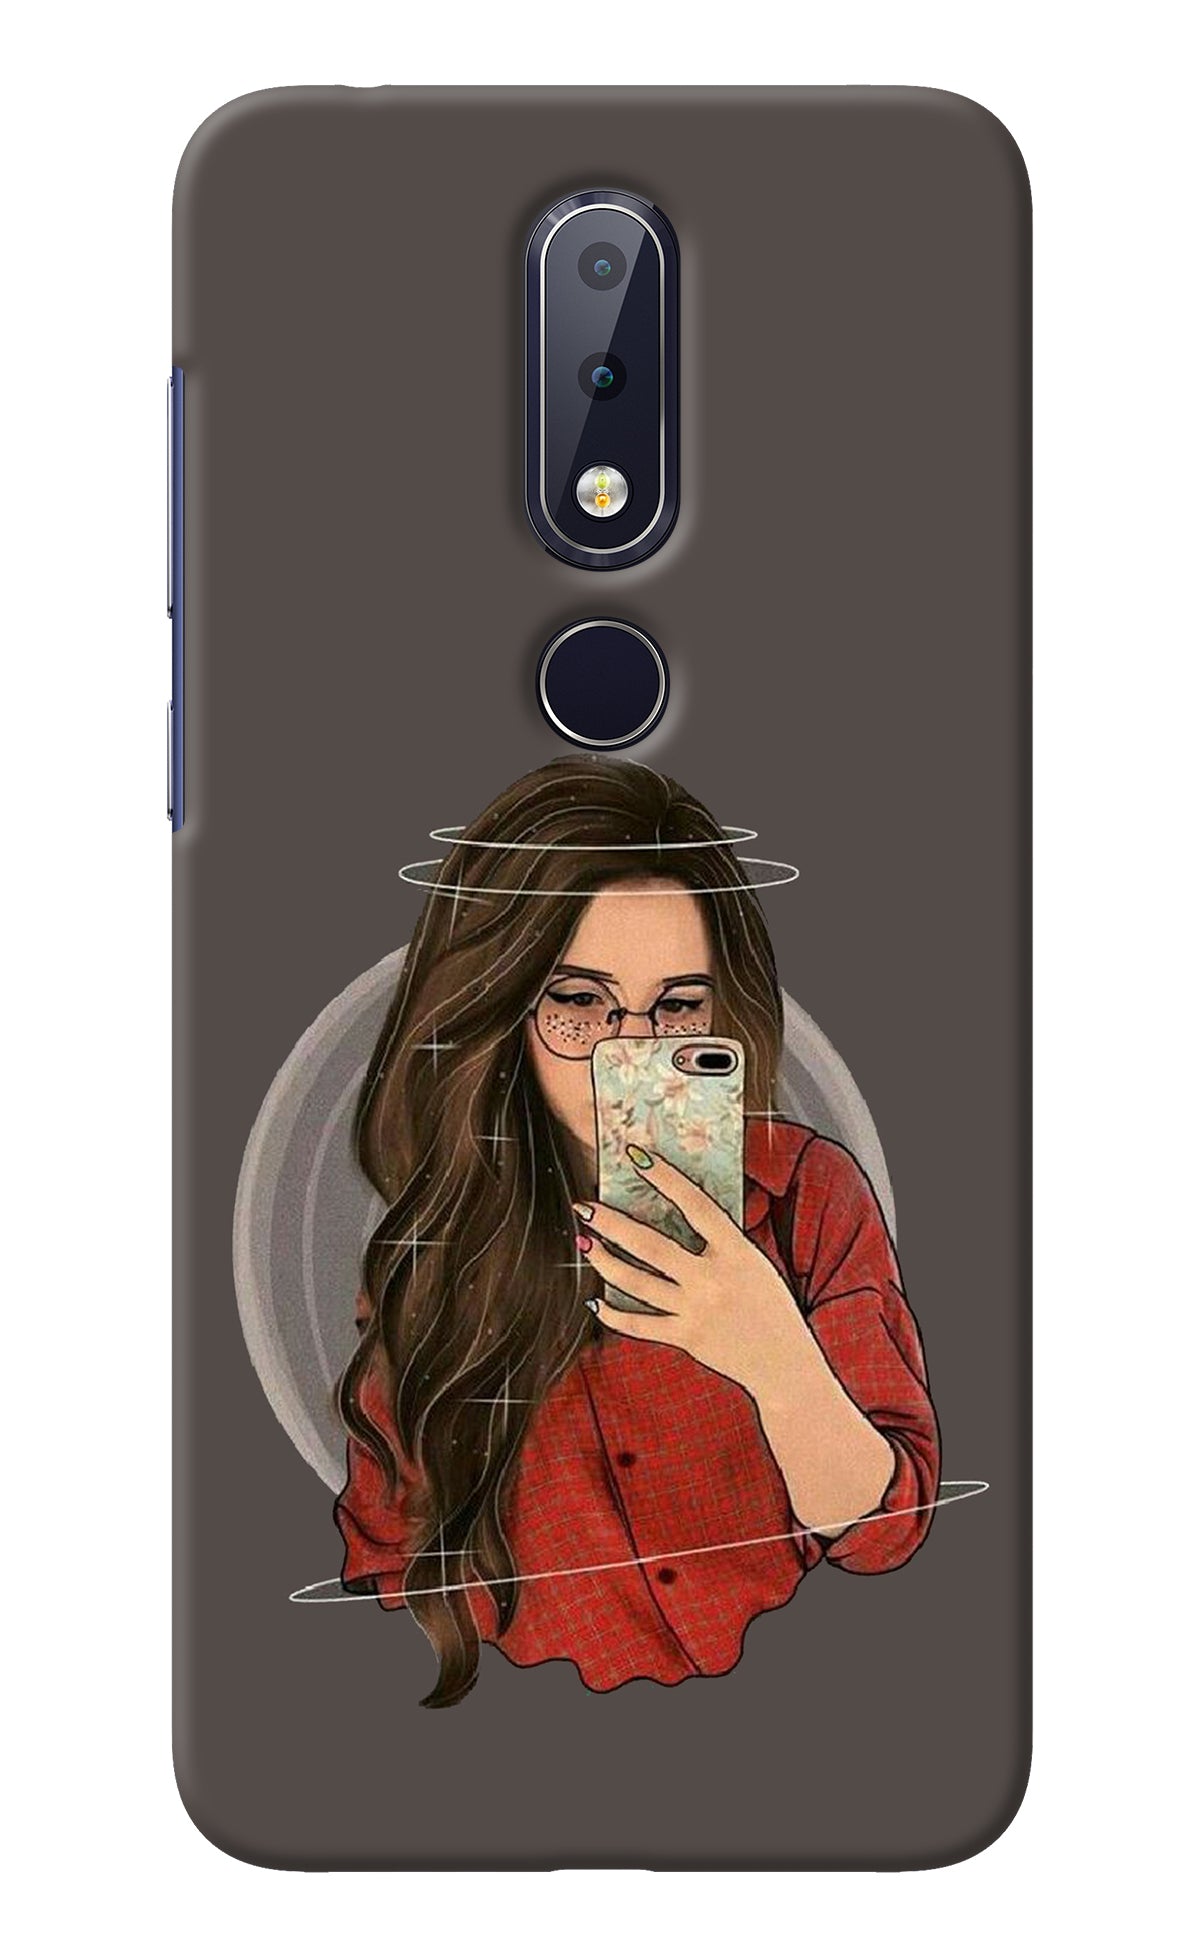 Selfie Queen Nokia 6.1 plus Back Cover